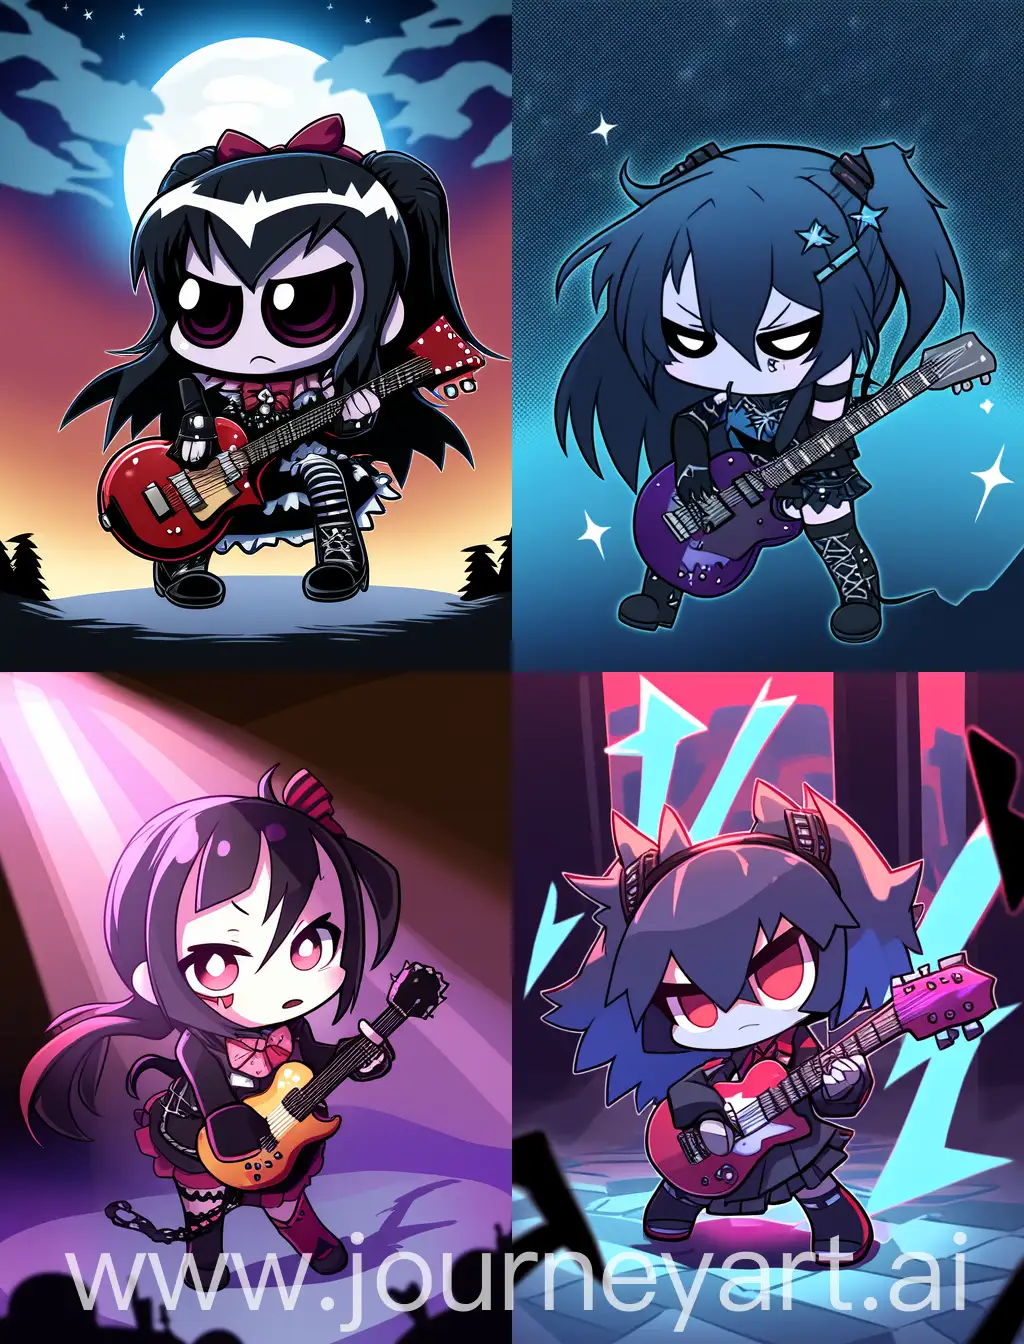 Chibi-Emo-Girl-Playing-Guitar-in-Spooky-Anime-Cartoon-Scene